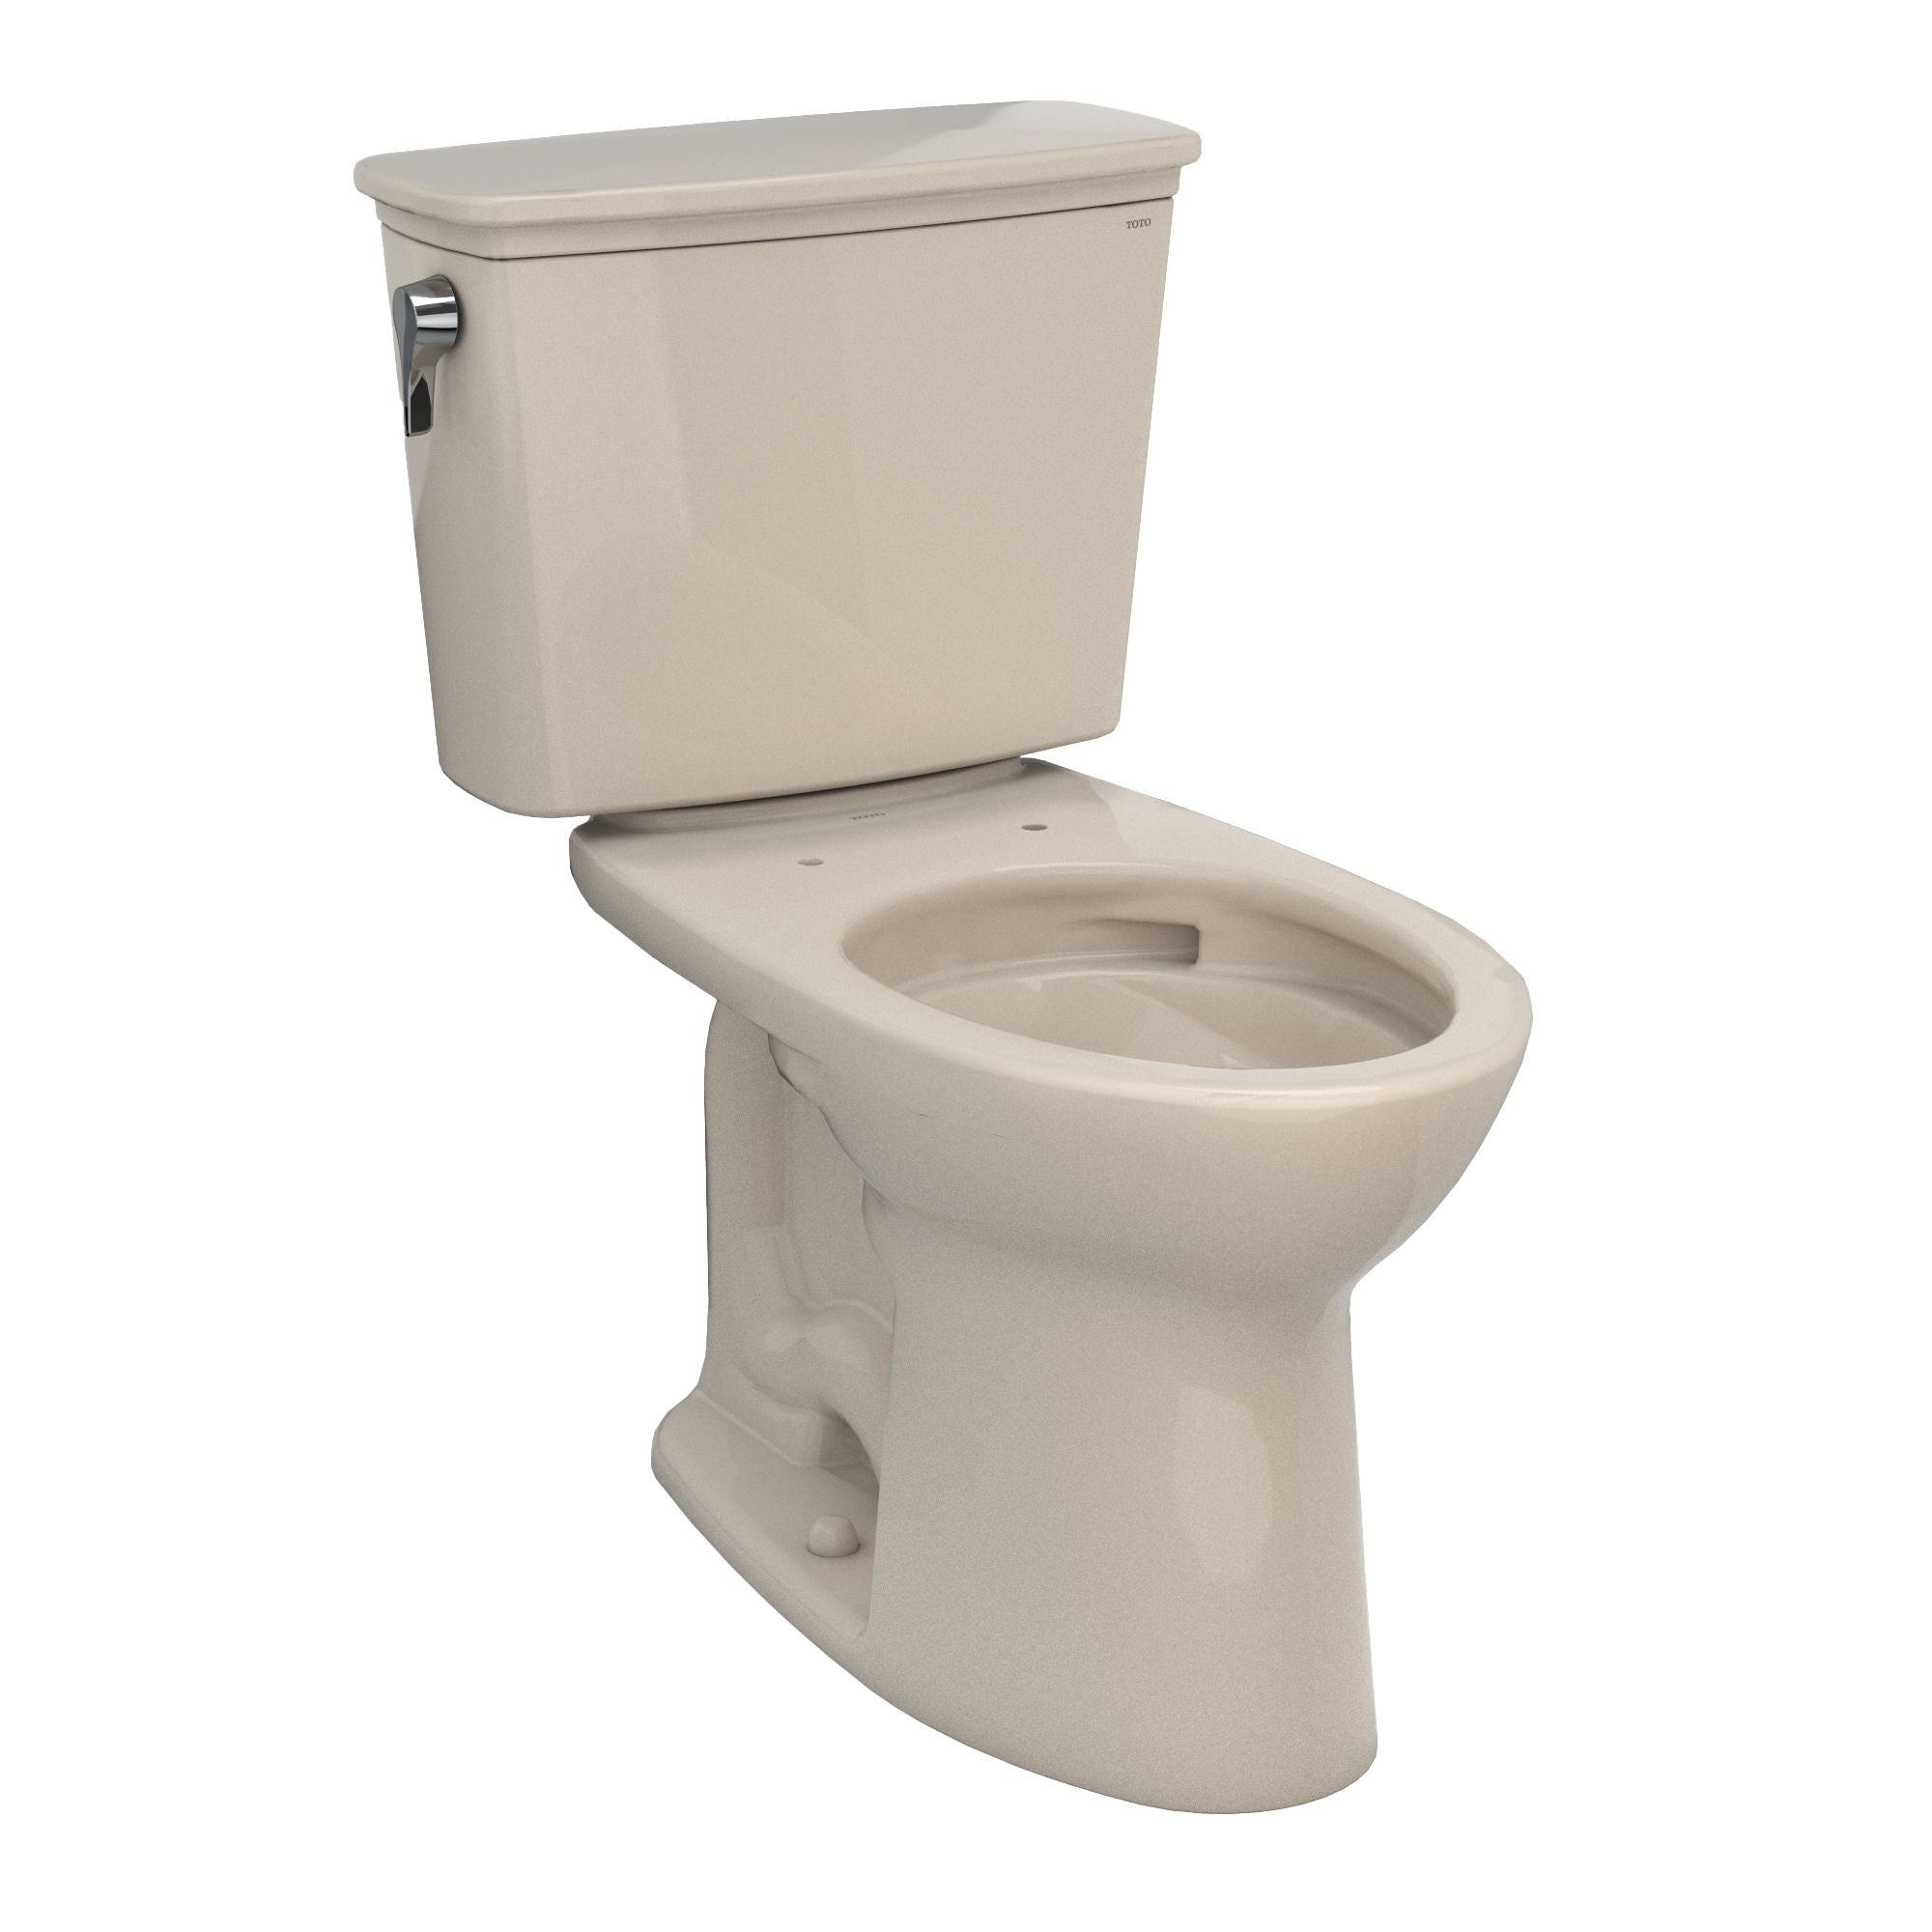 Toto Drake Transitional Two-piece Toilet 1.28 GPF Elongated Bowl